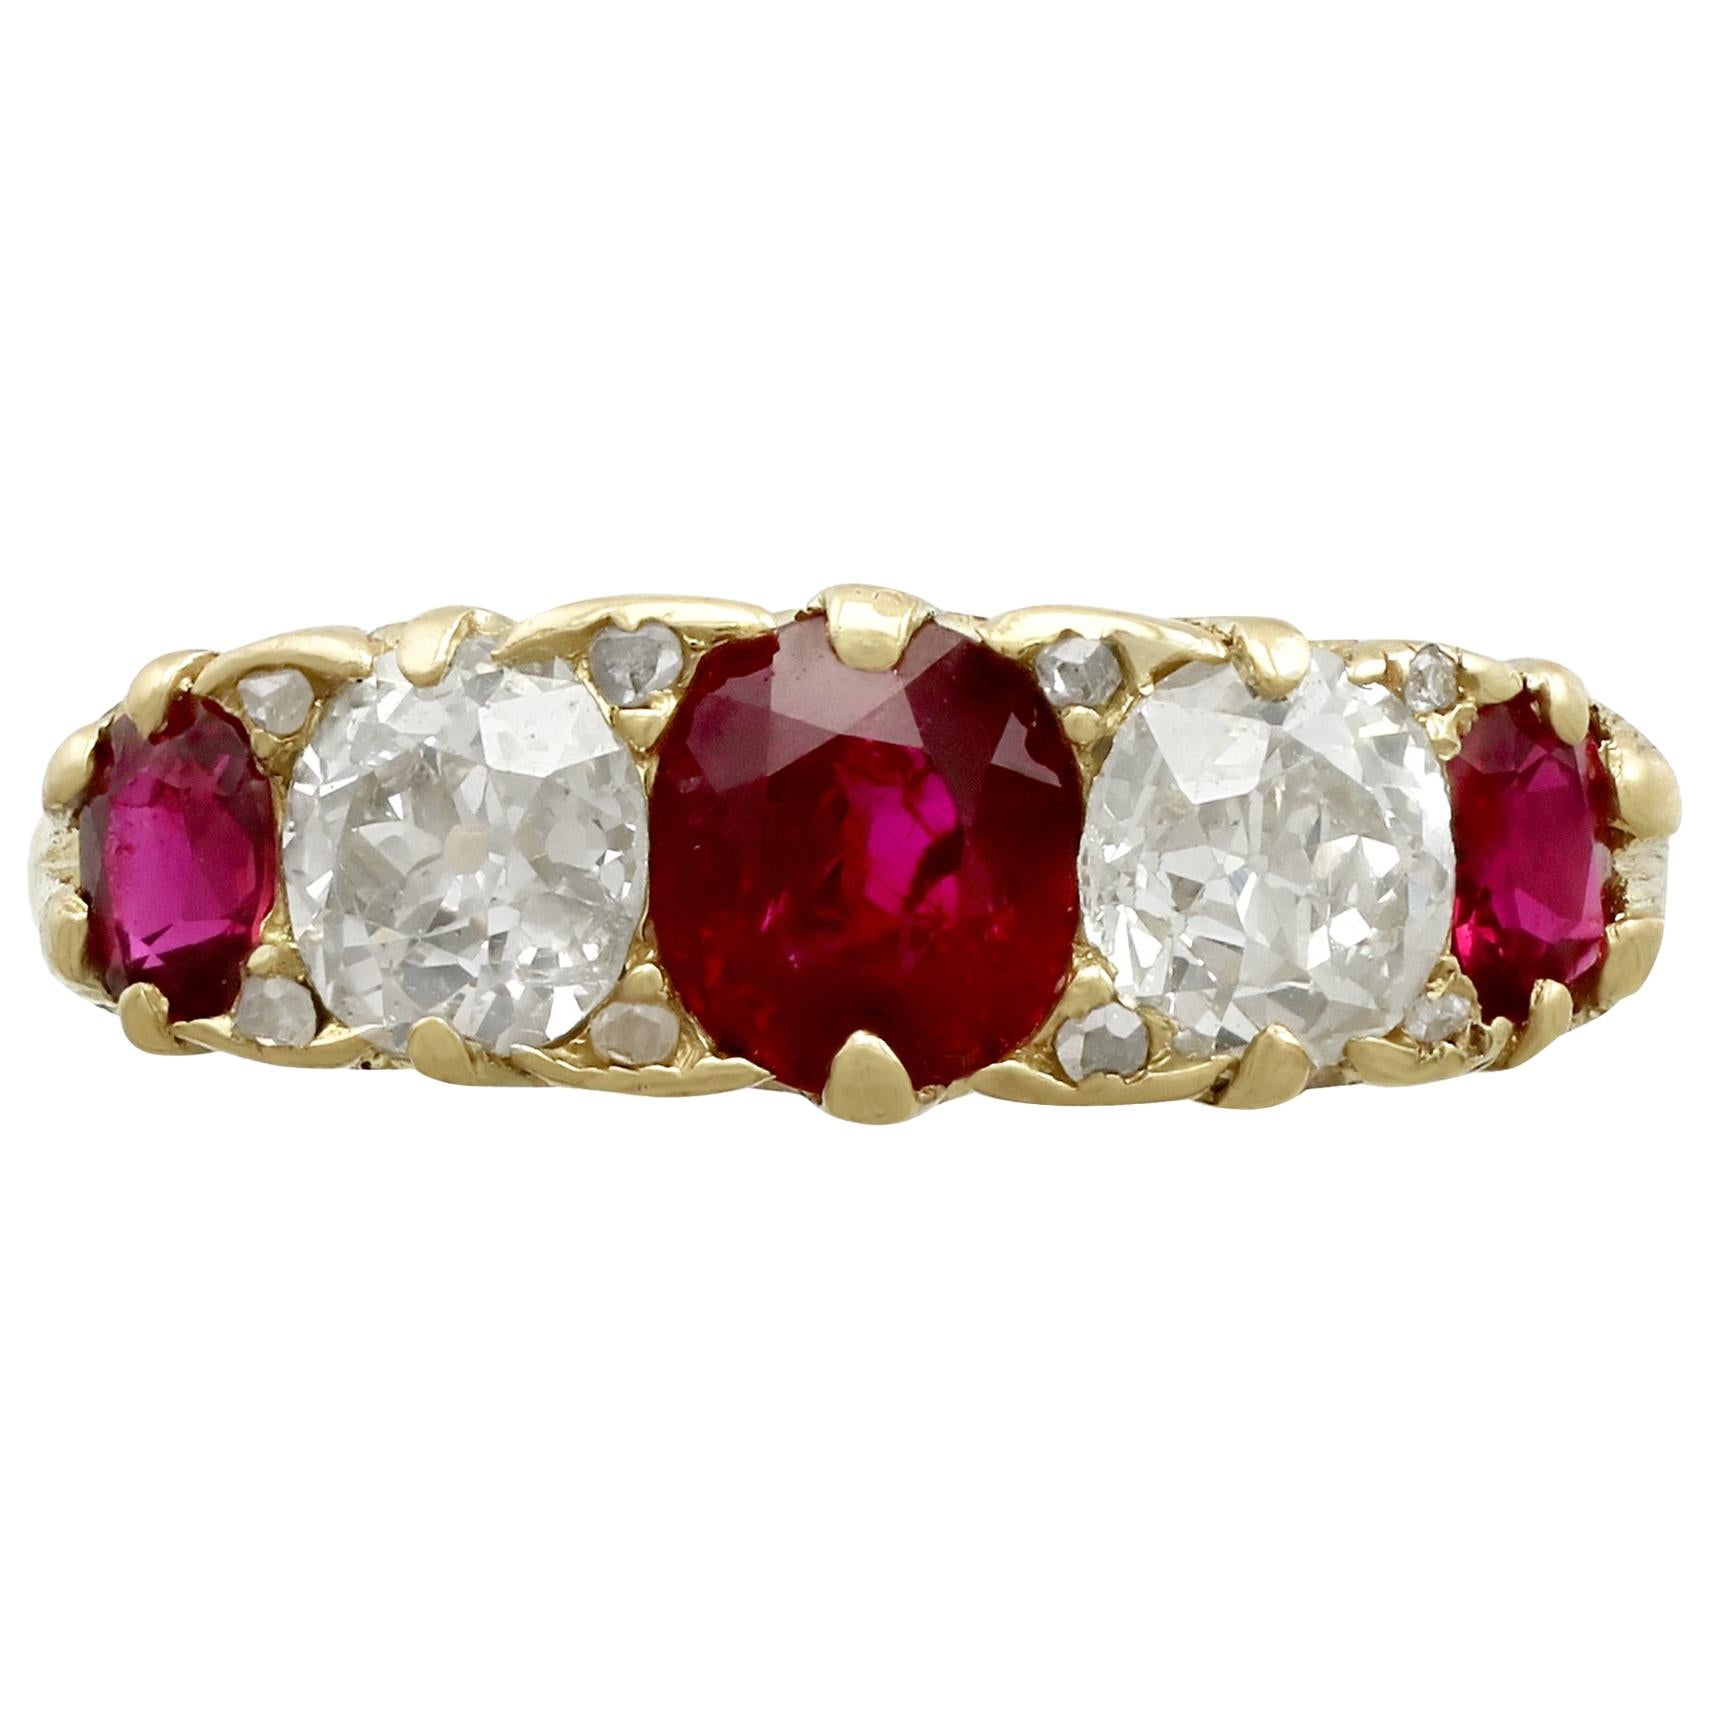 Antique 1.19 Carat Ruby and 1.15 Carat Diamond Five-Stone Dress Ring